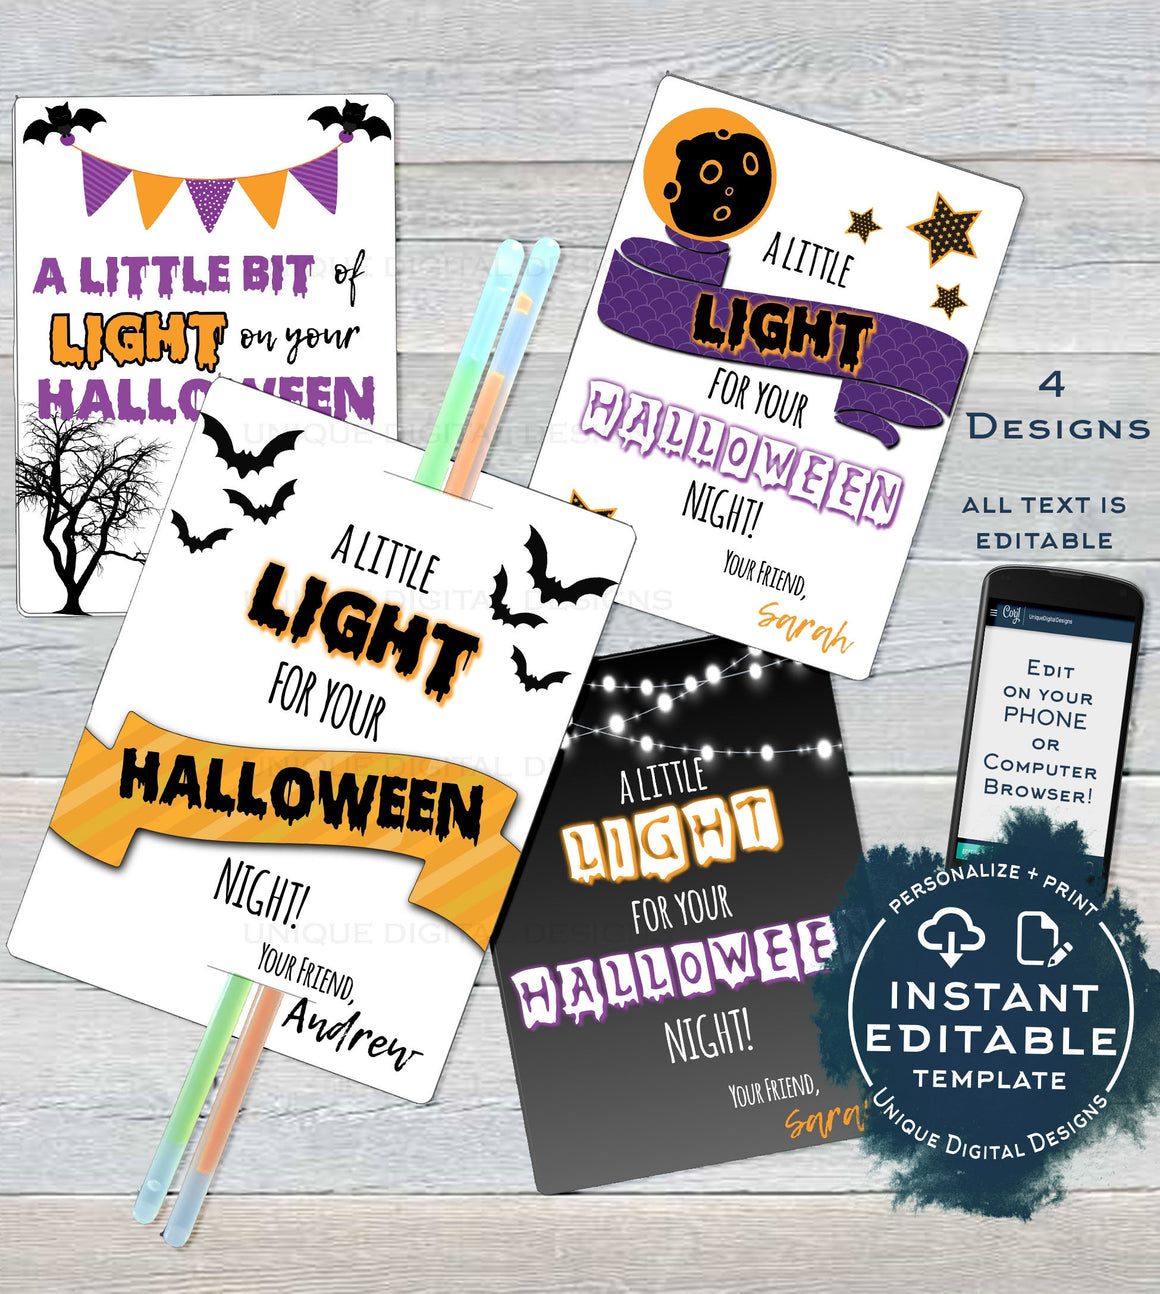 Editable Halloween Glow Stick Tags A Little Light For Halloween Night